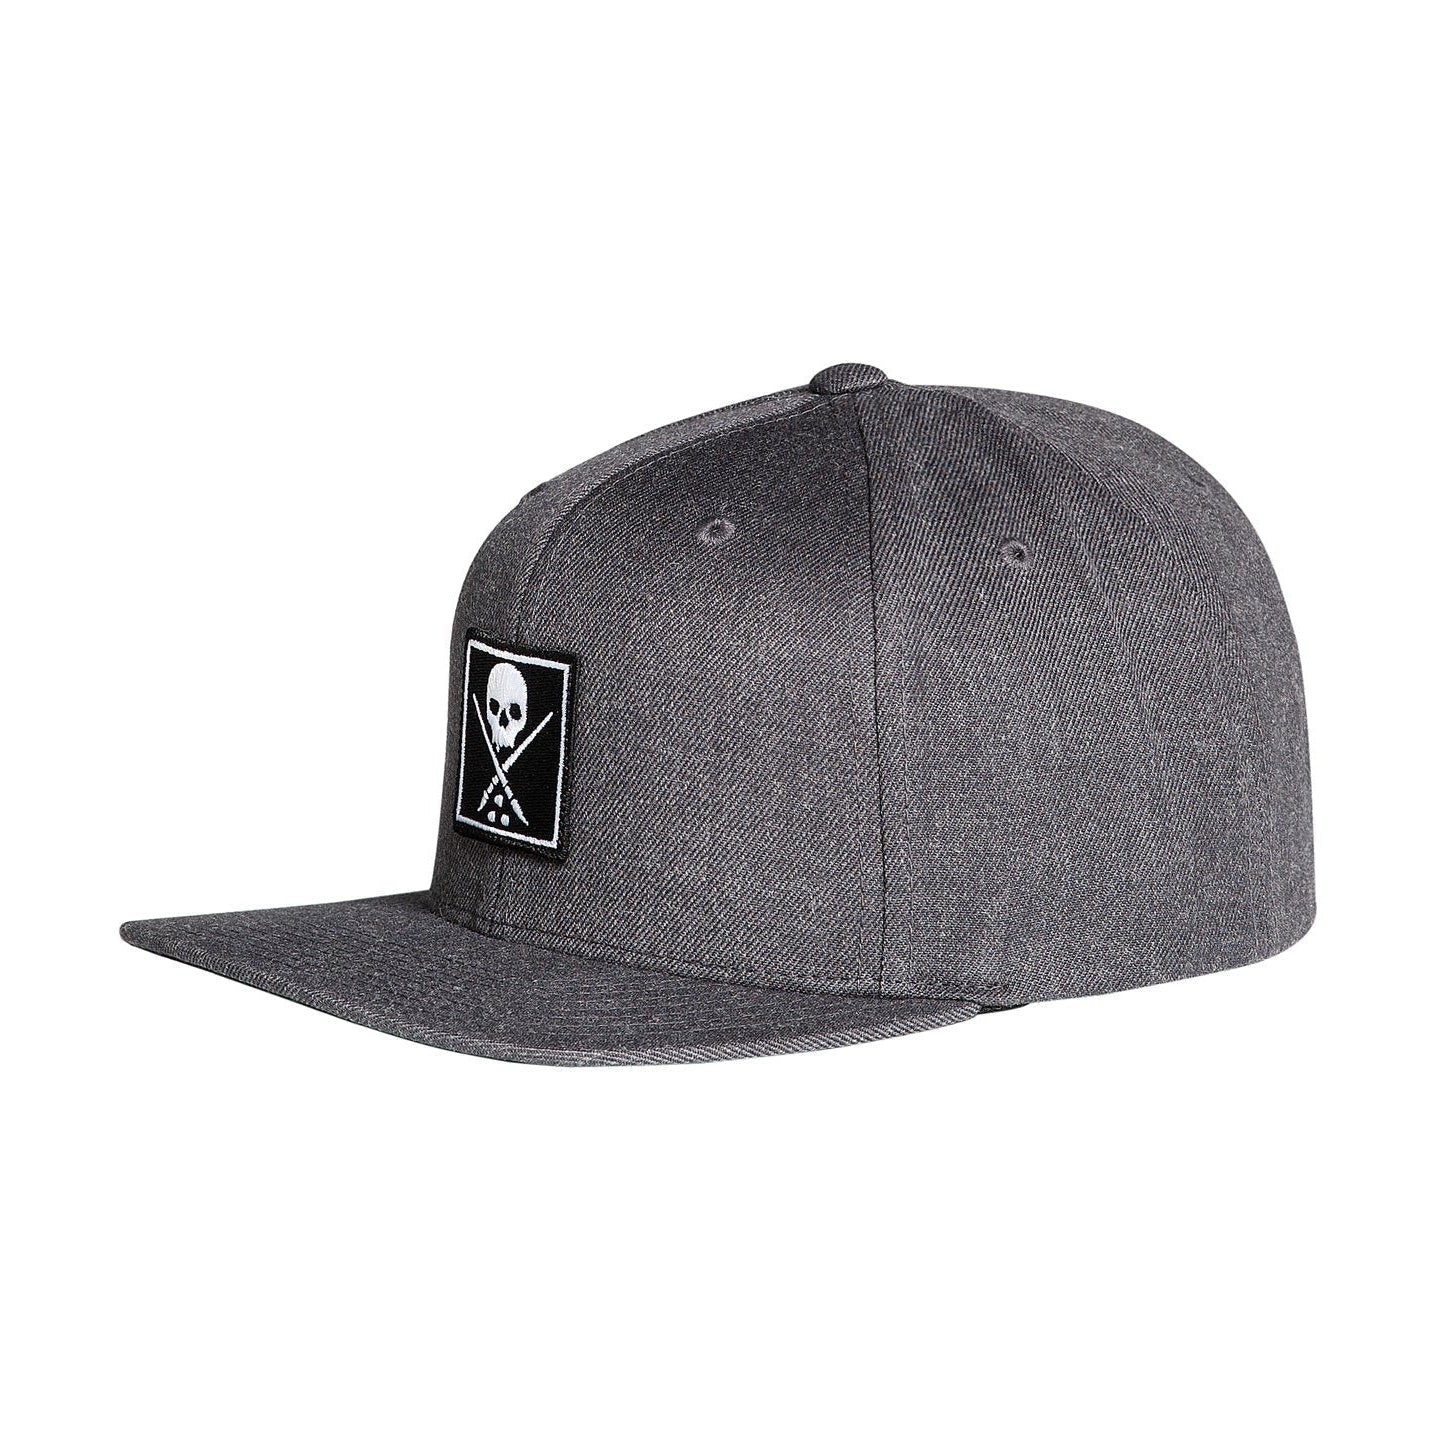 Collective Grey Snapback Cap-Mens Beanies, Hats & Snapback Caps-Scarlett Dawn